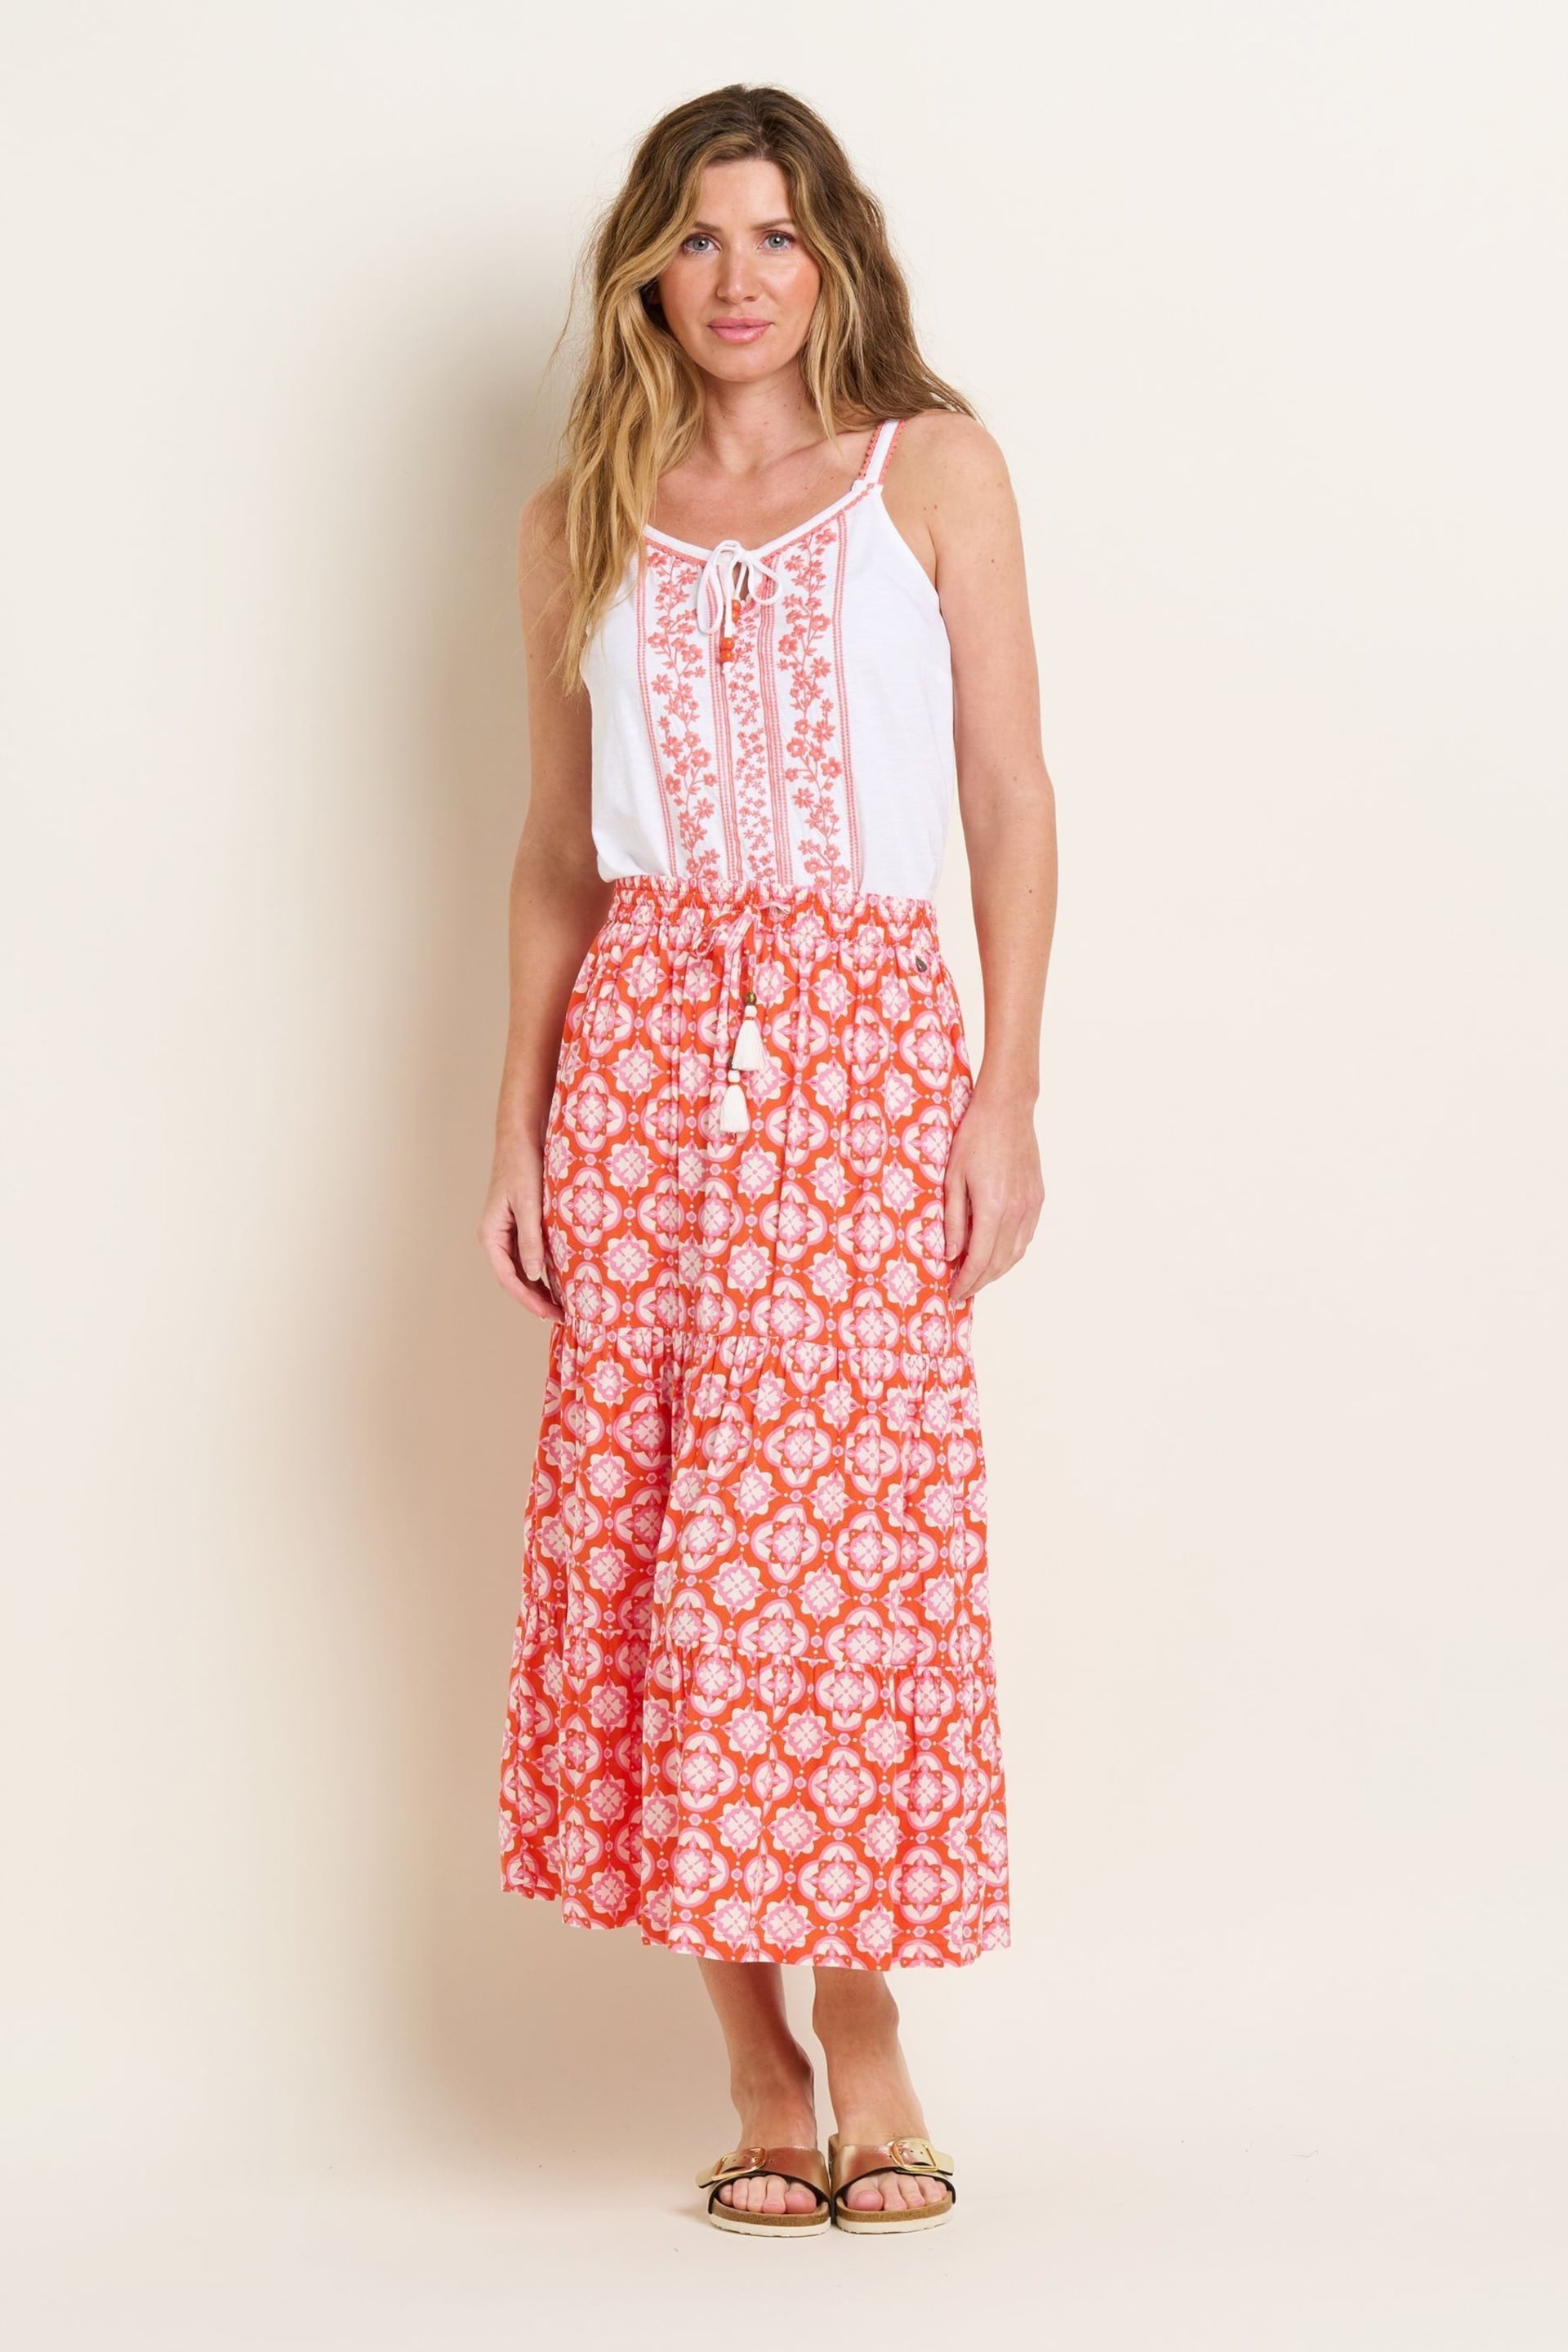 Brakeburn Pink Moroccan Tile Skirt - Image 4 of 4